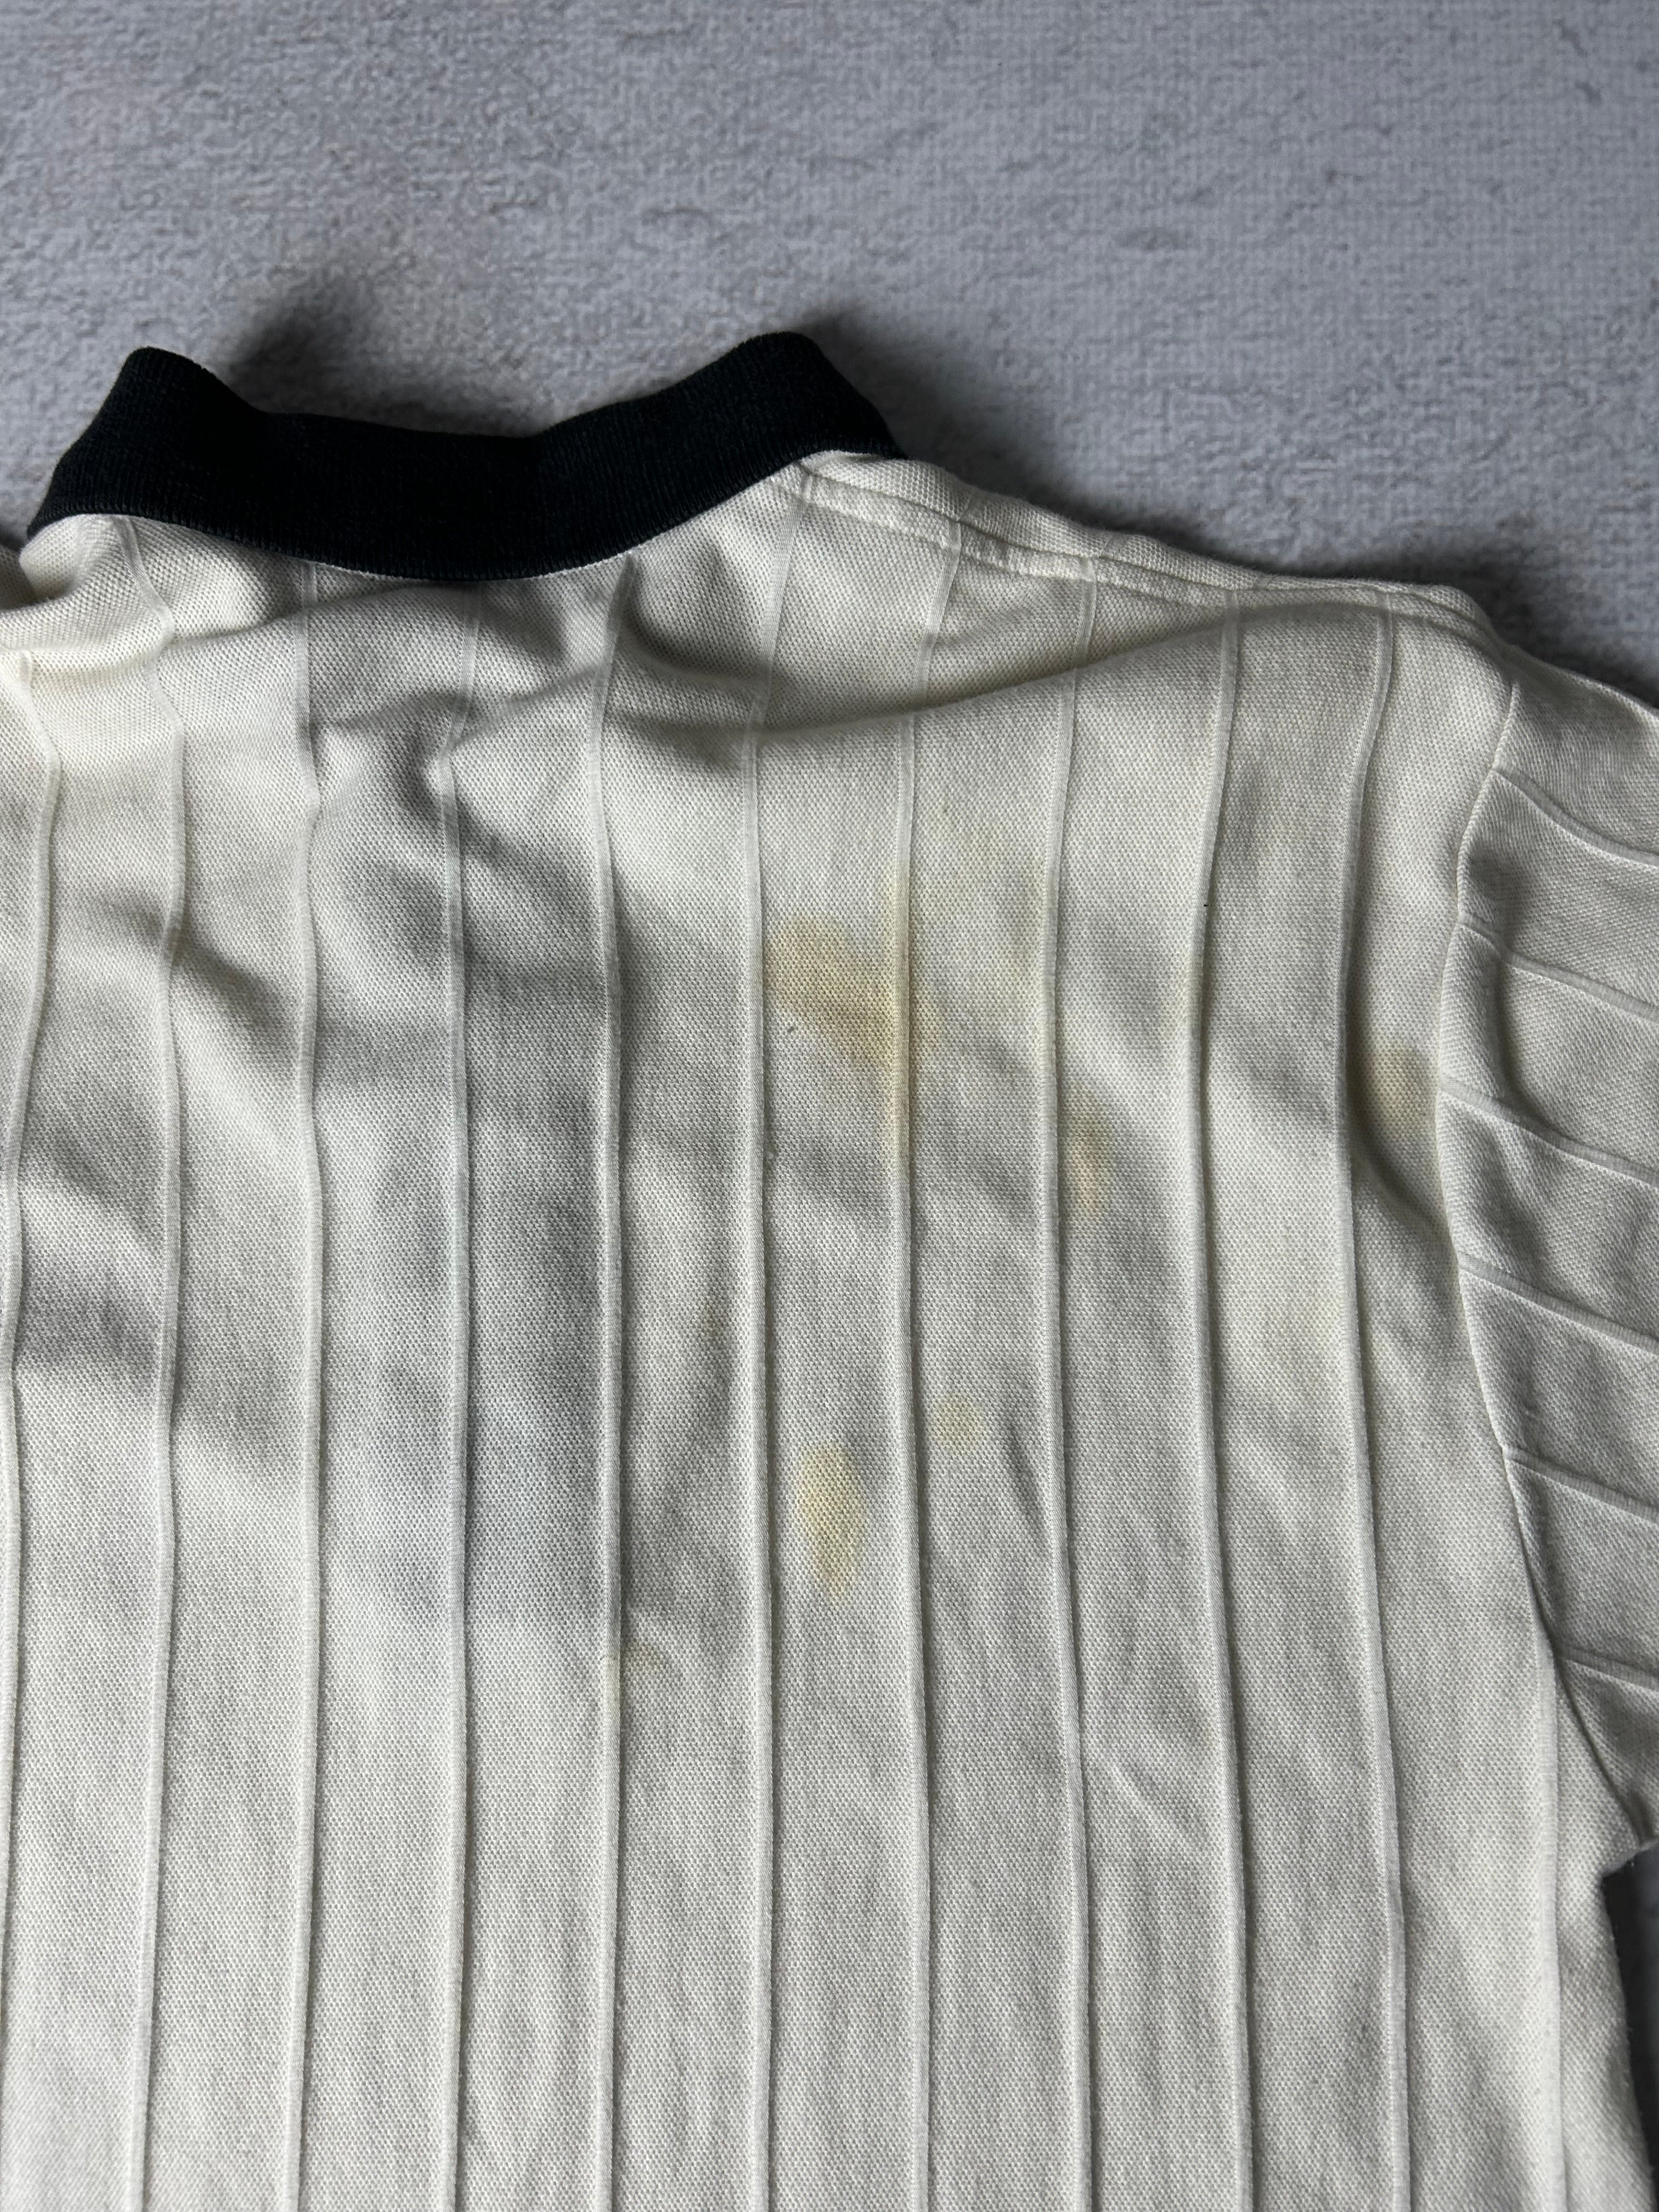 Vintage NFL Green Bay Polo Shirt - Men's Large